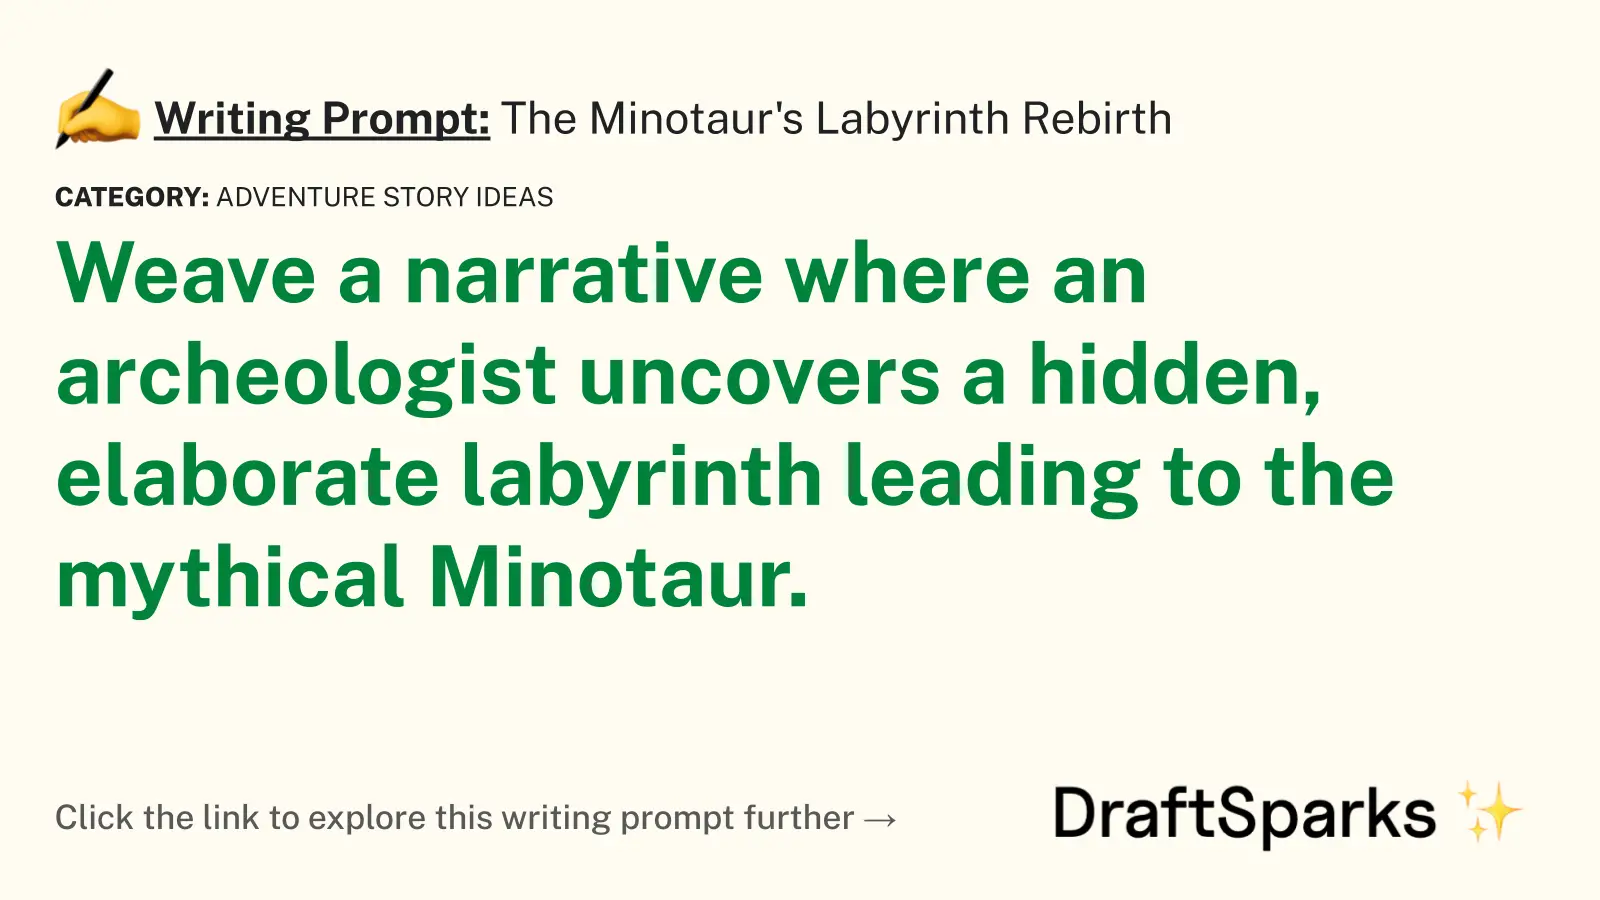 The Minotaur’s Labyrinth Rebirth